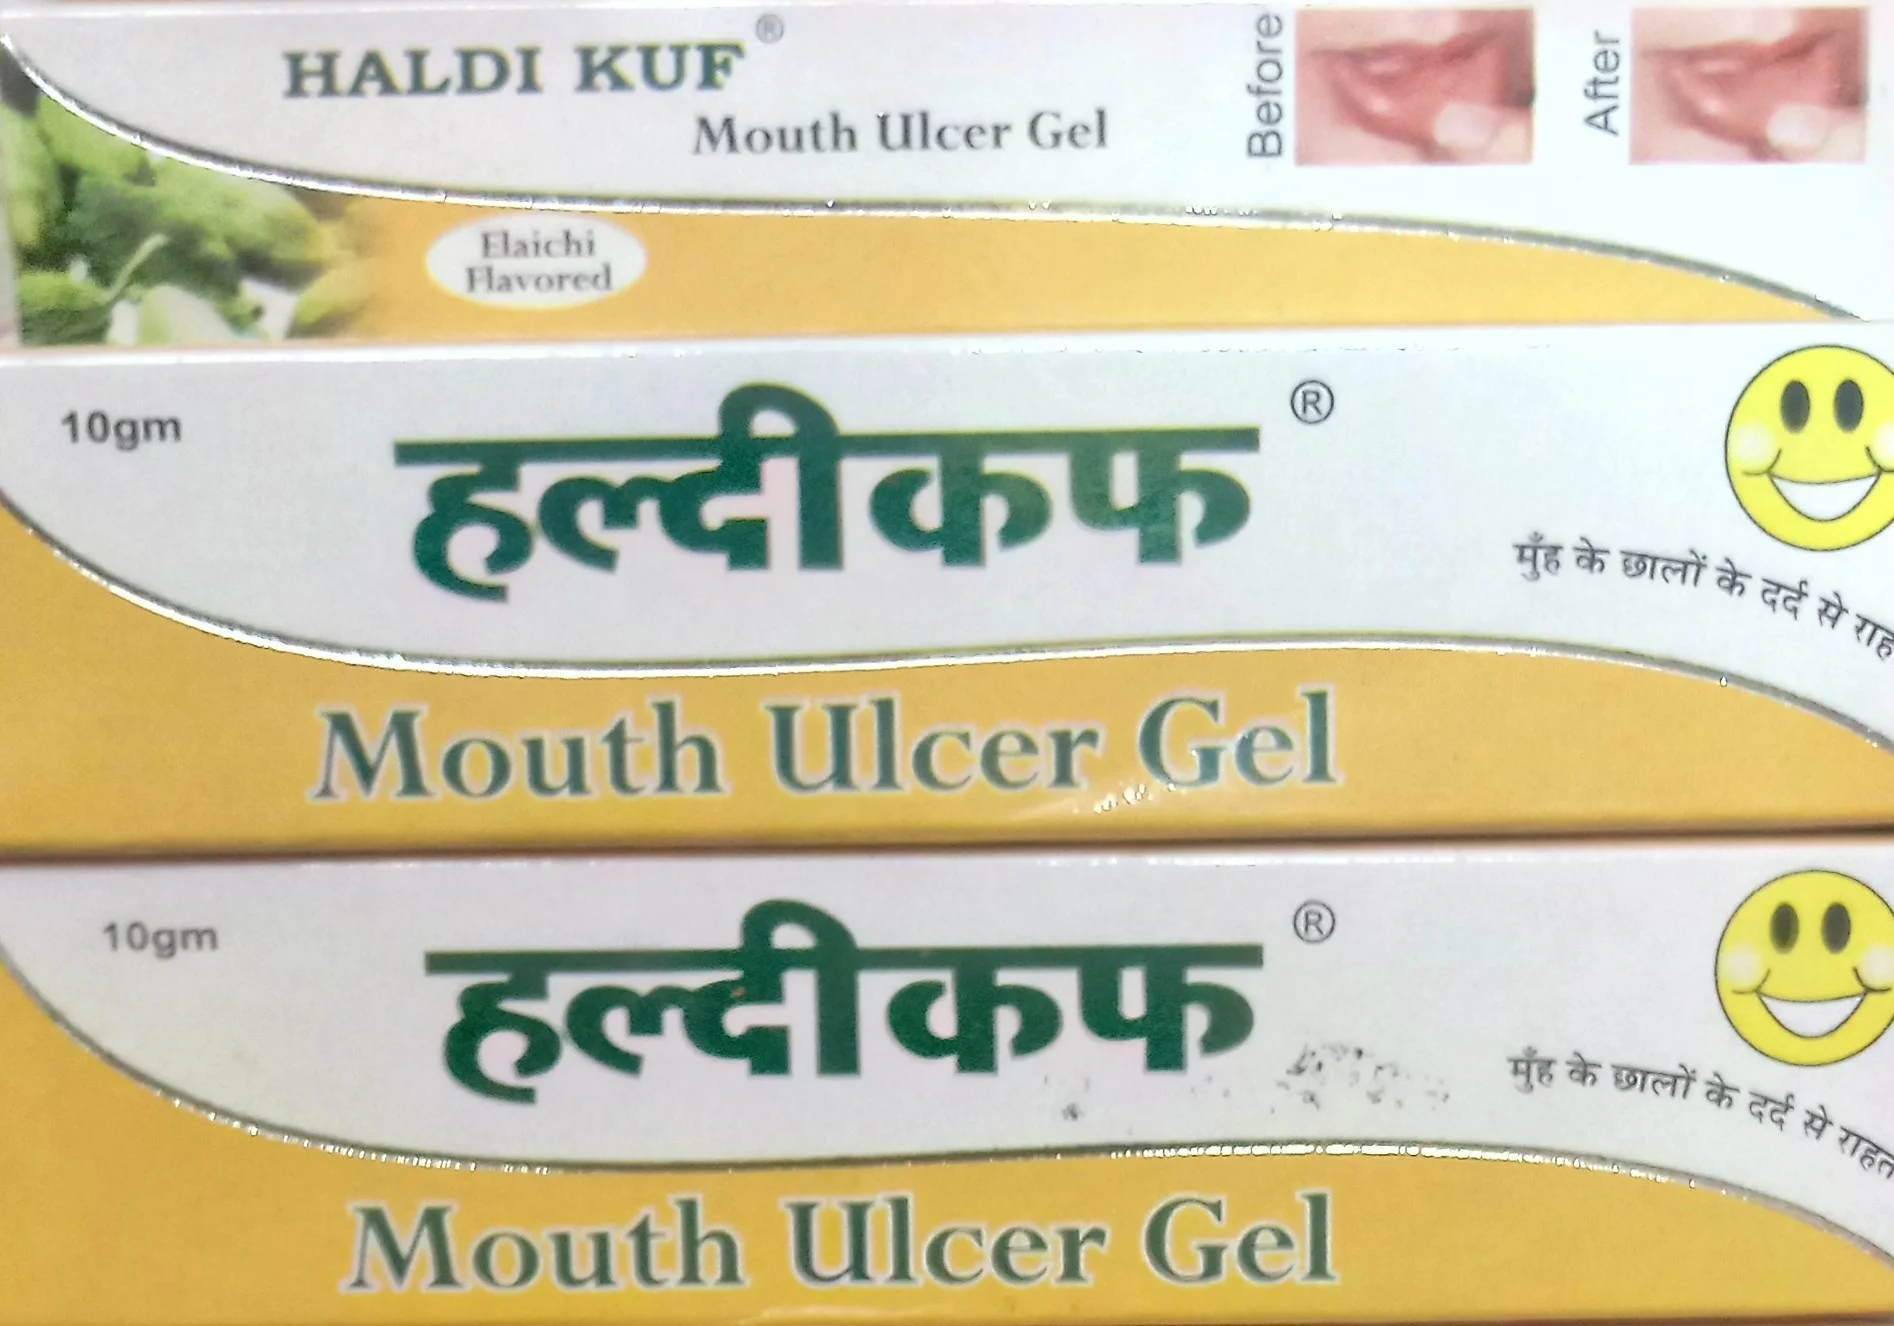 haldikuf mouth ulcer gel 10gm upto 20% off mahaveer & mahaveer